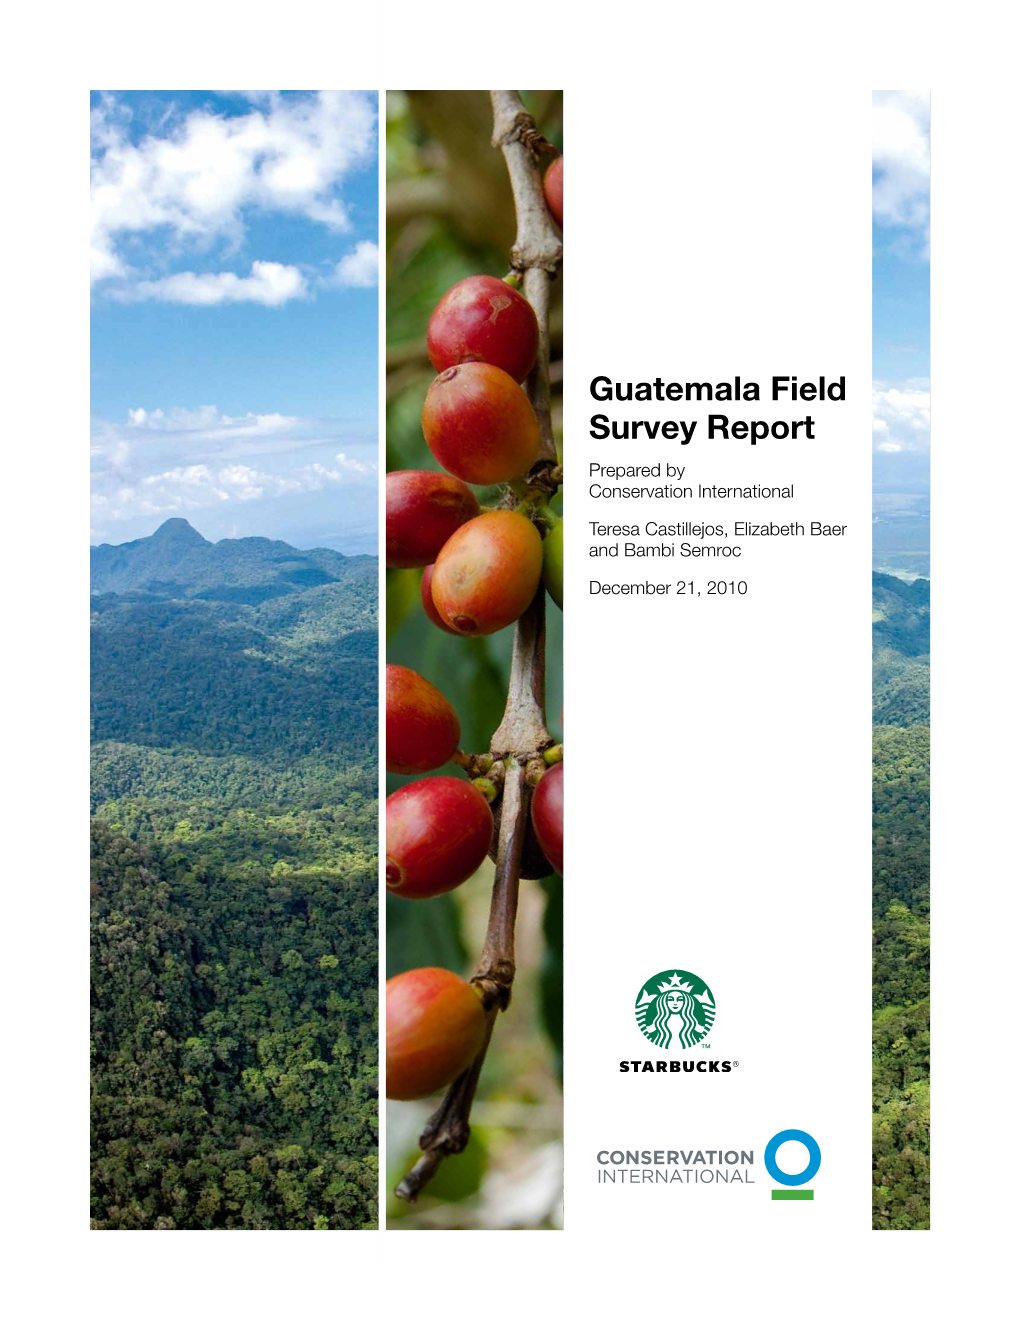 Guatemala Field Survey Report Prepared by Conservation International